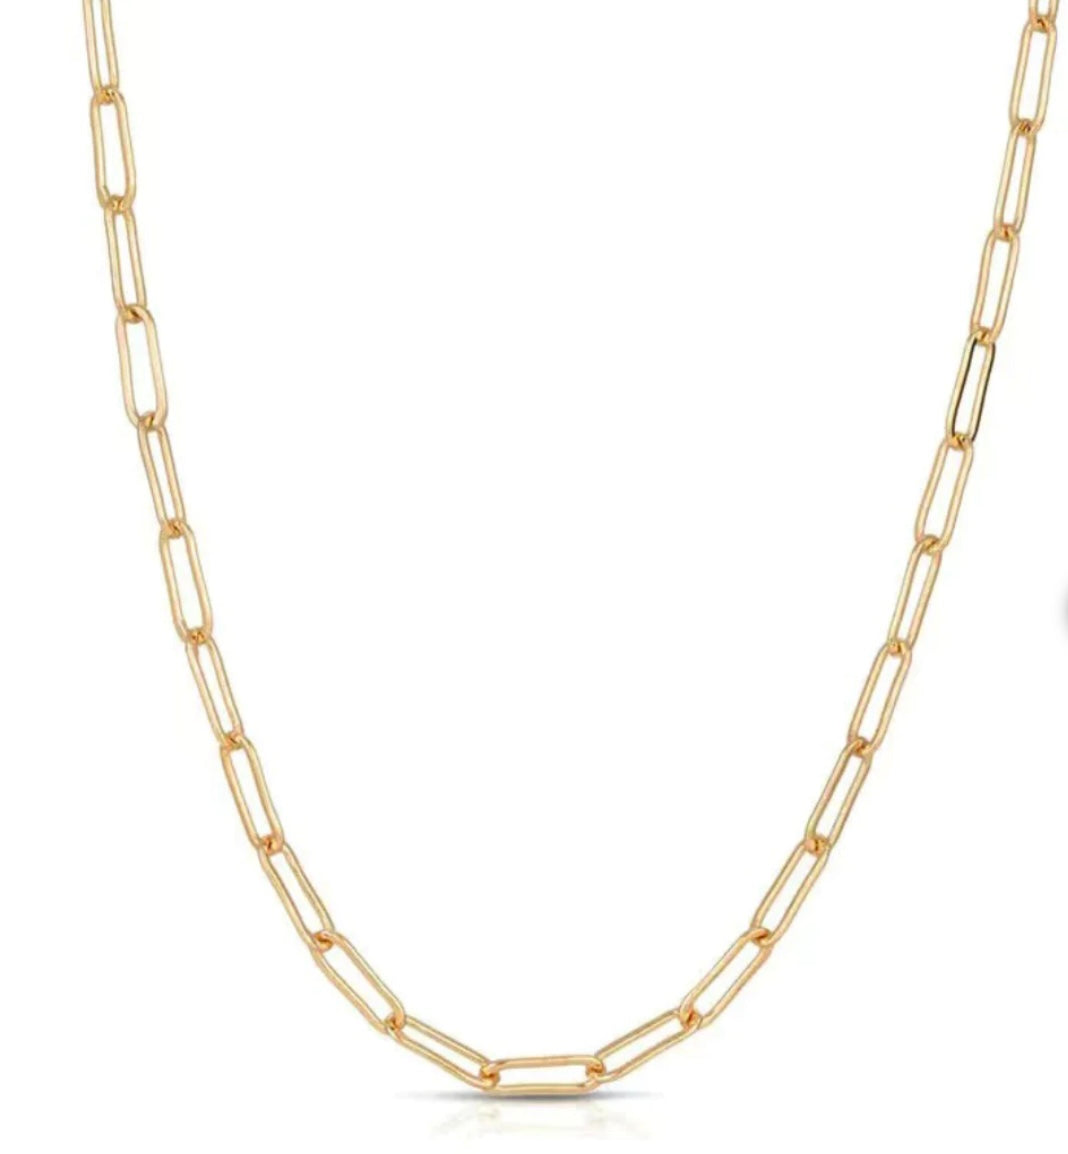 Laneway Chain Necklace